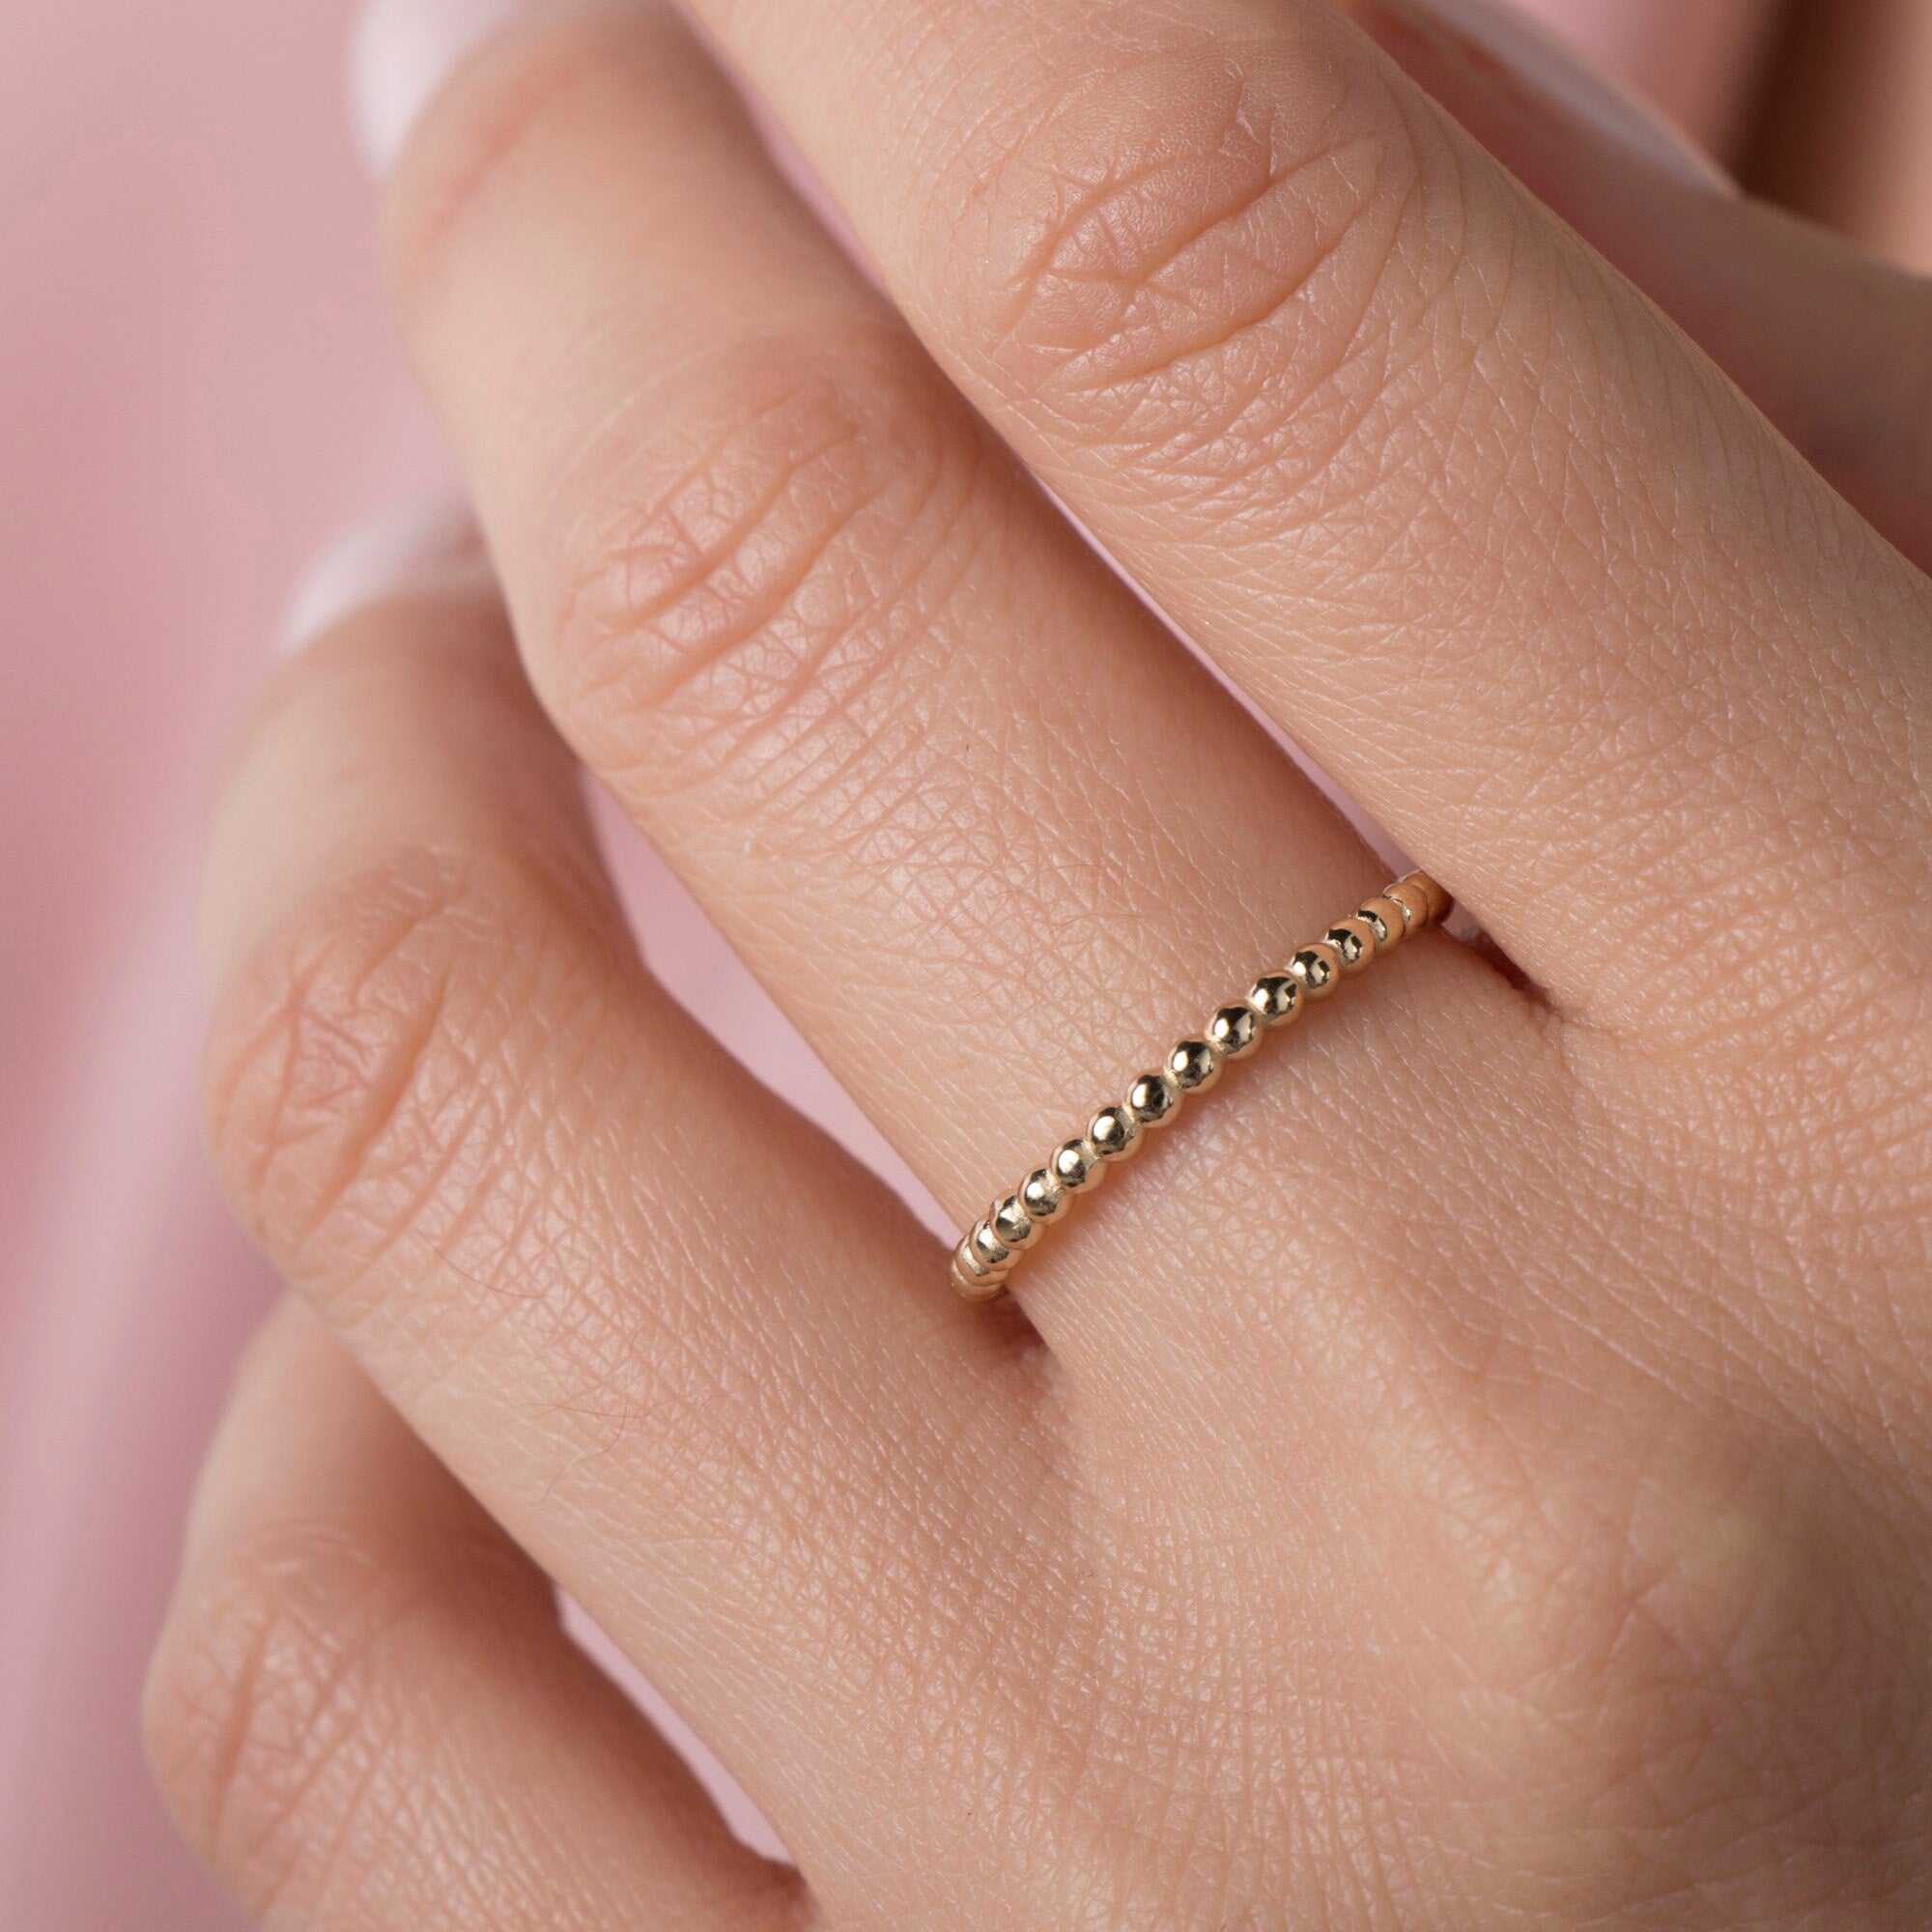 Minimalist Beaded Ring in 14K Gold